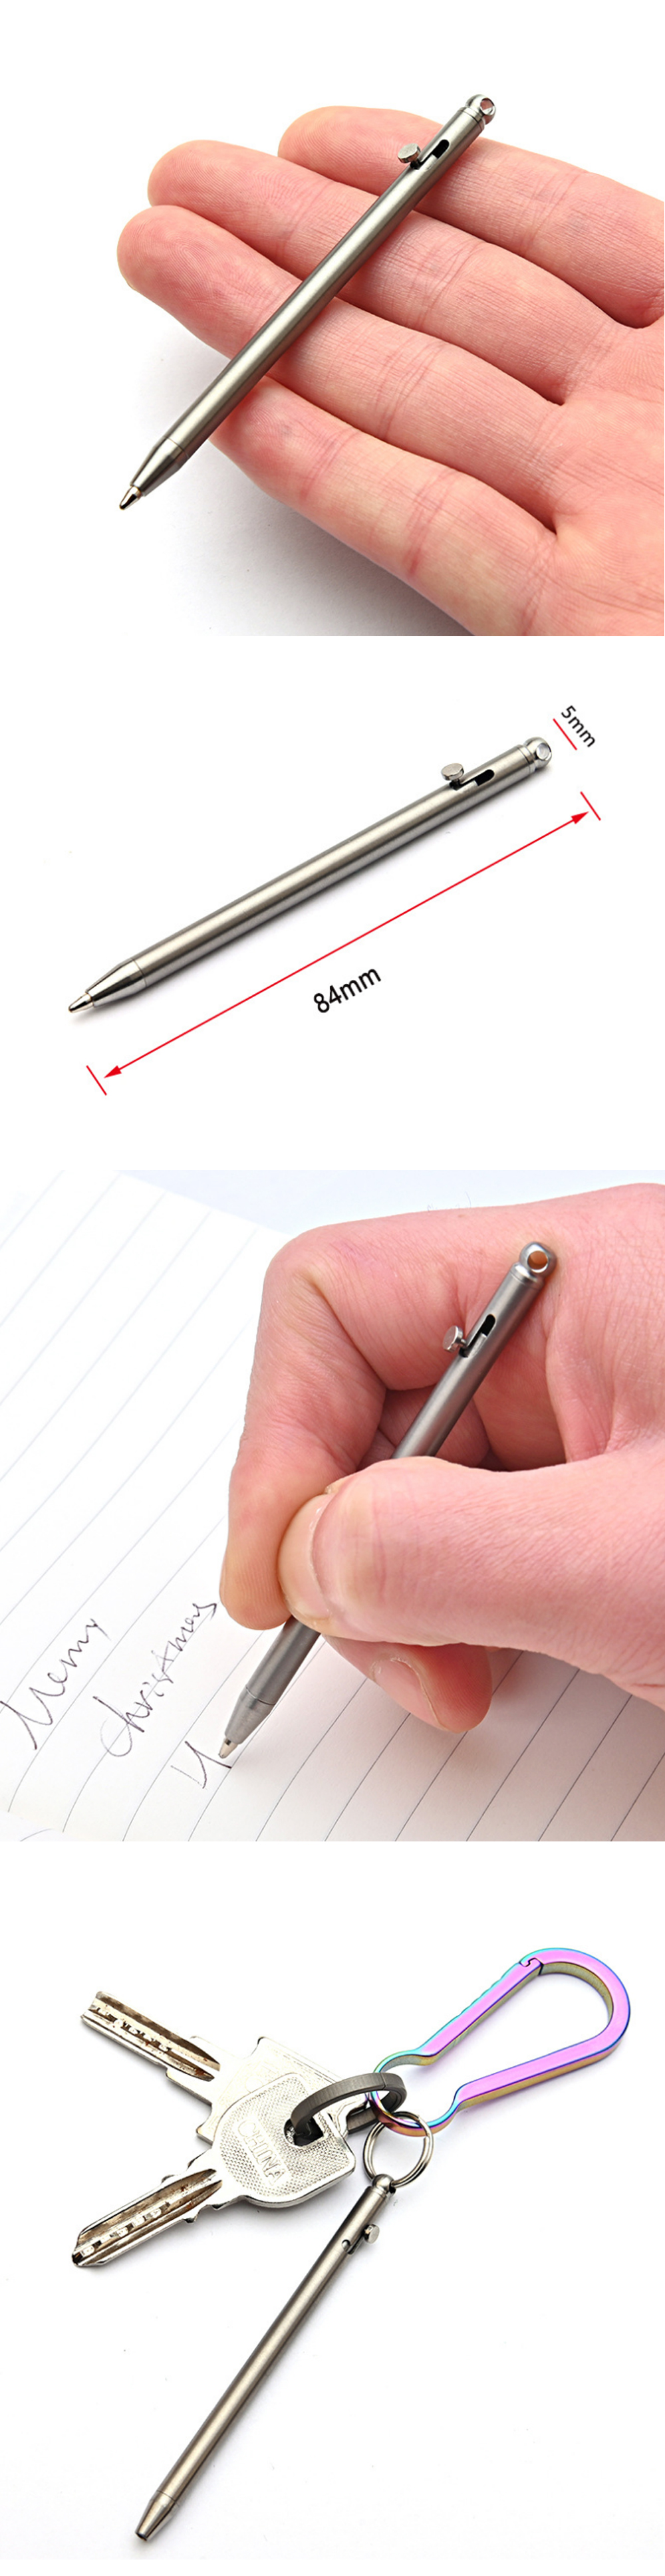 XANESreg-EDC-Titanium-Pen-Mini-Tactical-Key-chain-Metal-Ballpoint-Signature-Bolt-Pen-Outdoor-Camping-1806025-1